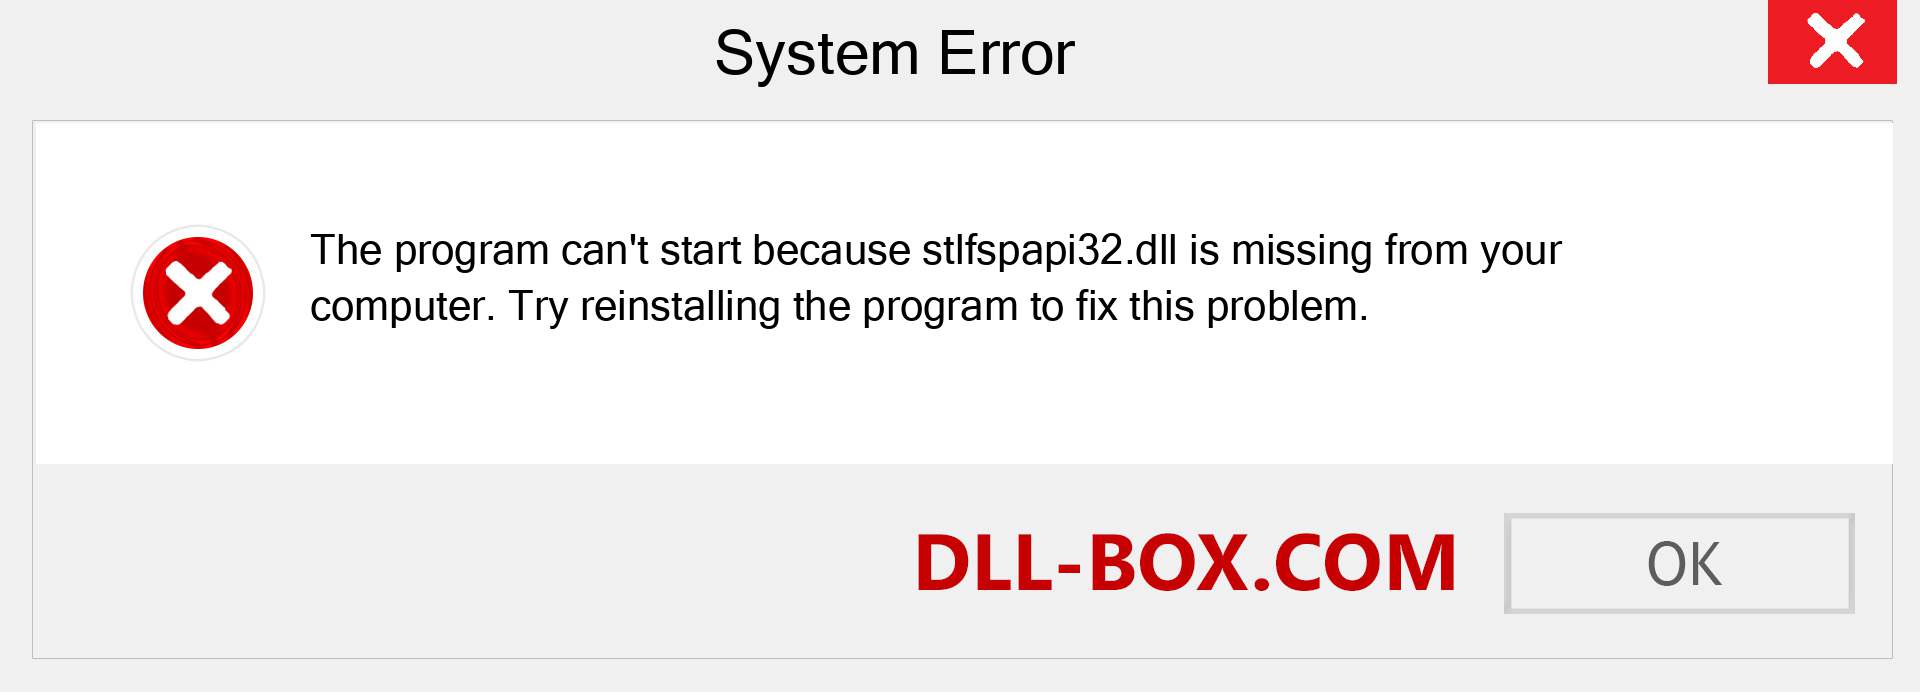  stlfspapi32.dll file is missing?. Download for Windows 7, 8, 10 - Fix  stlfspapi32 dll Missing Error on Windows, photos, images